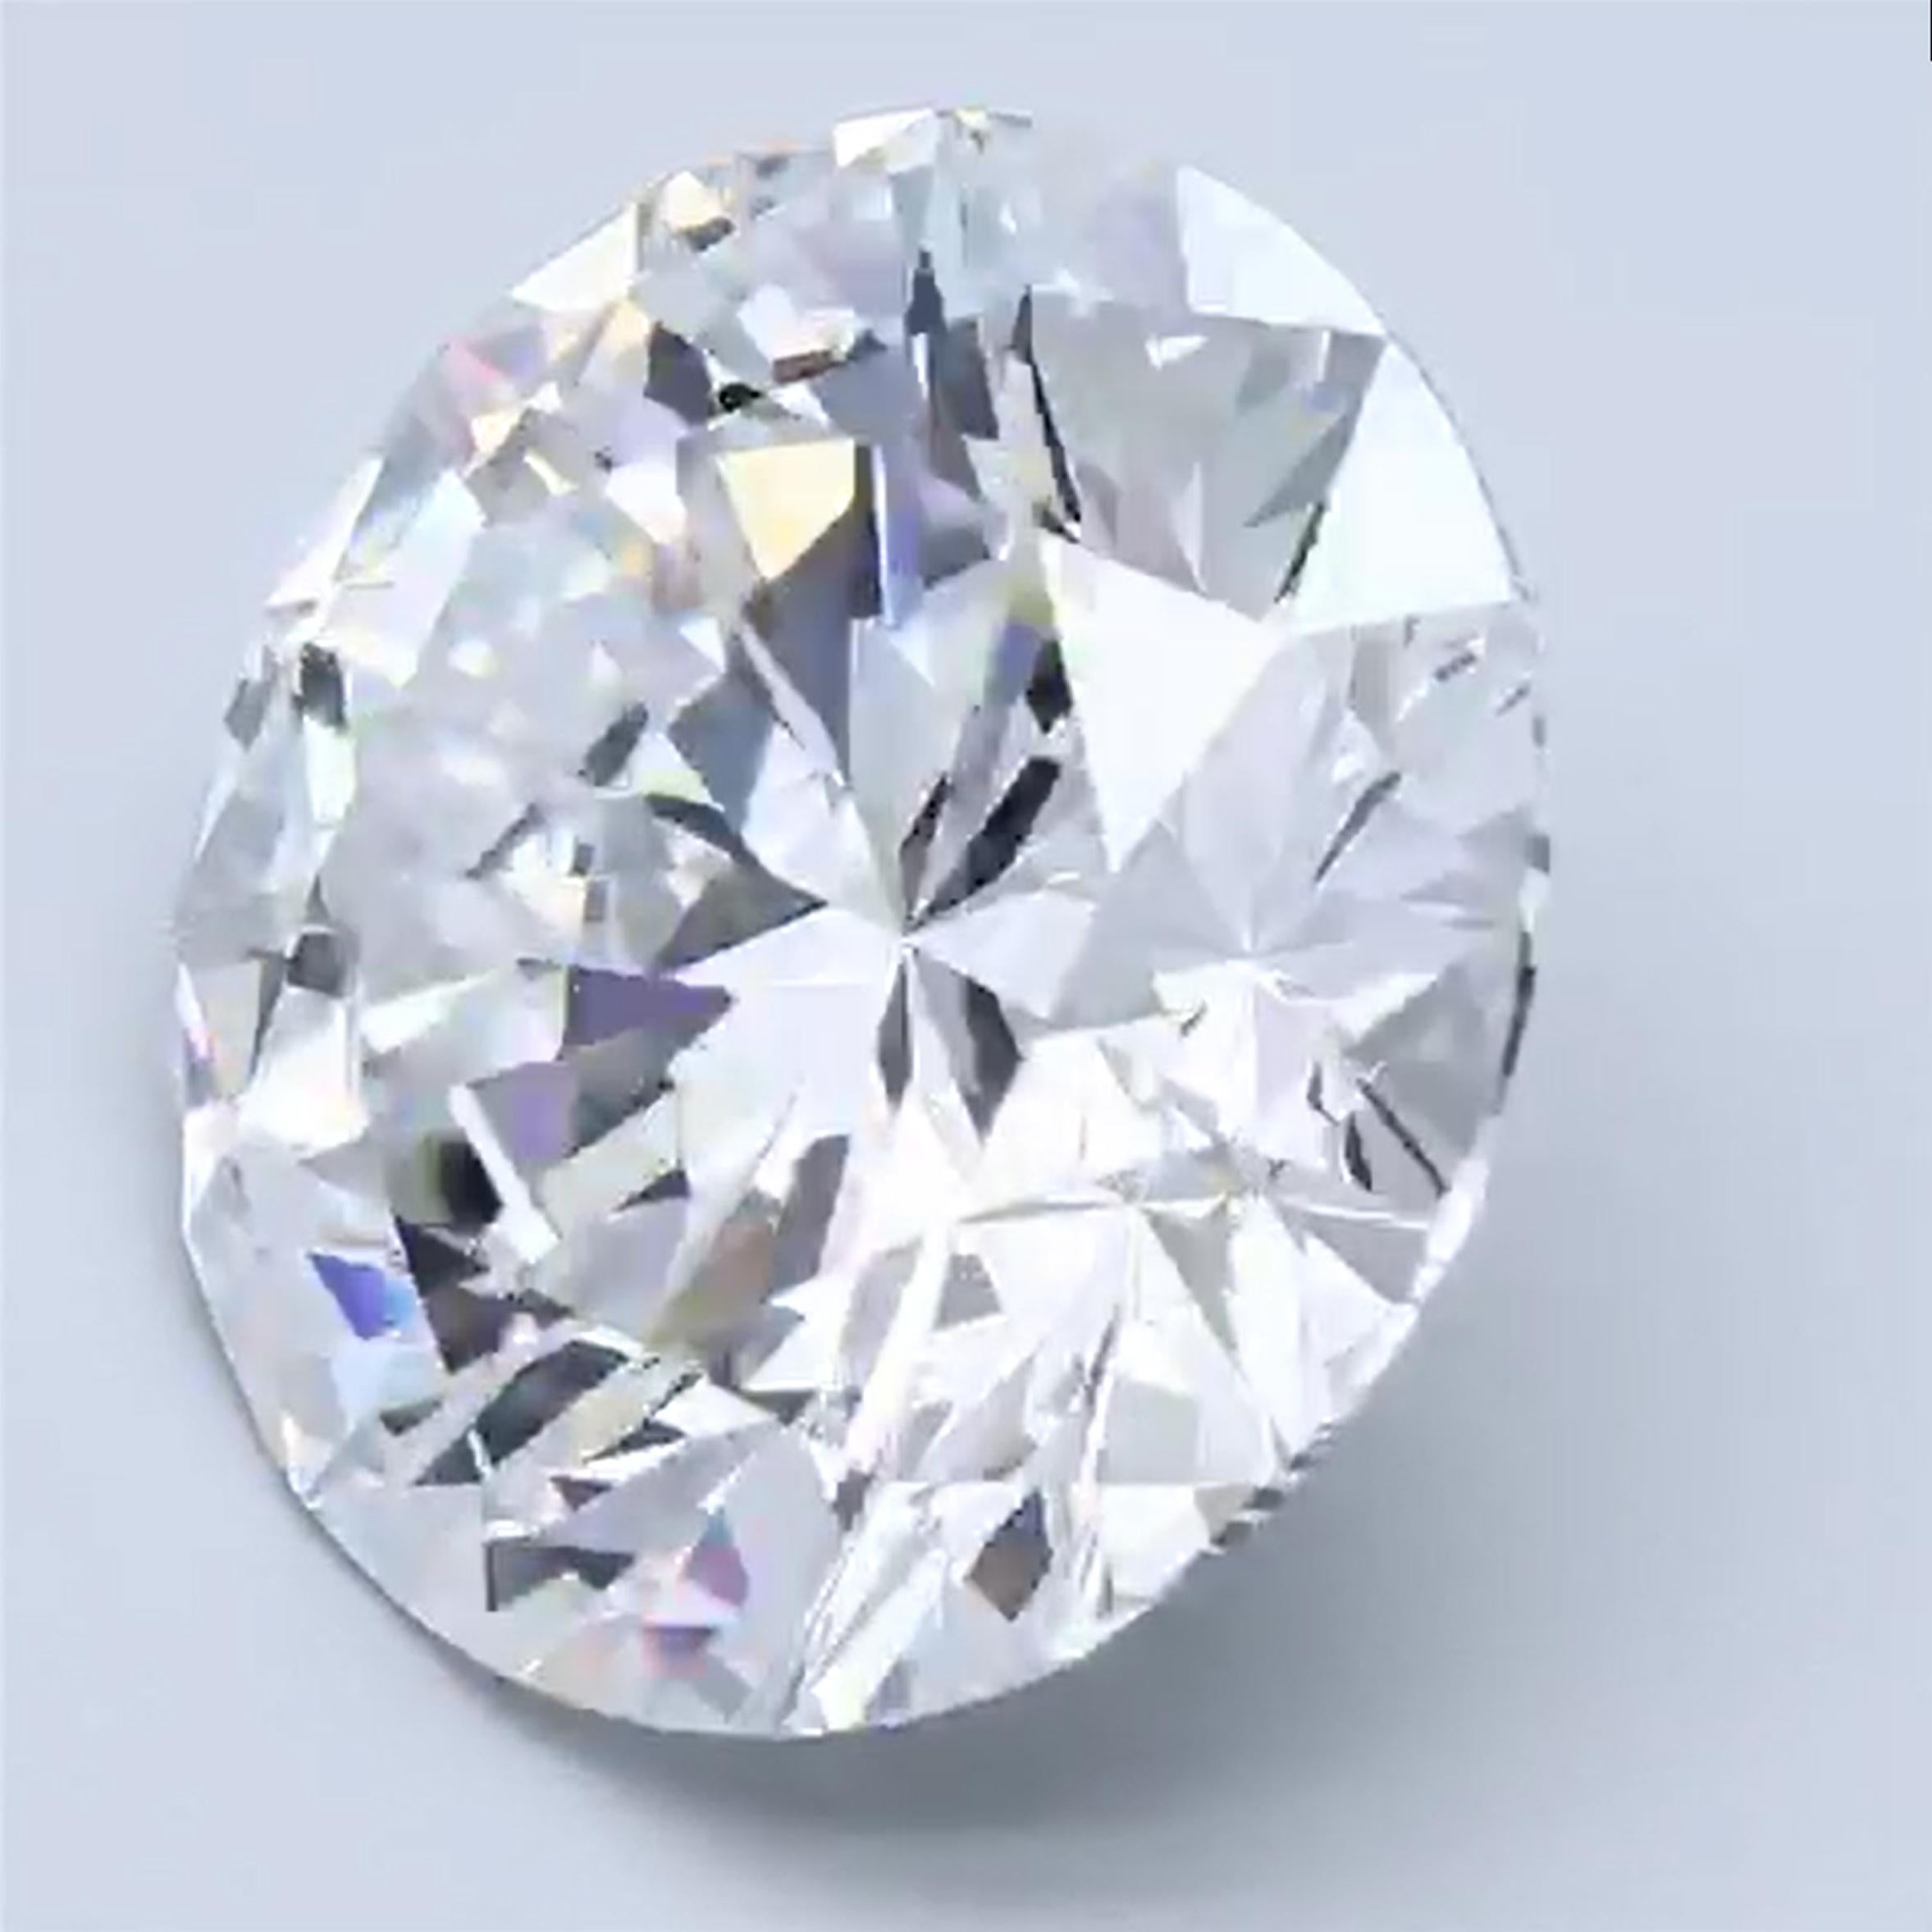 is a j diamond good